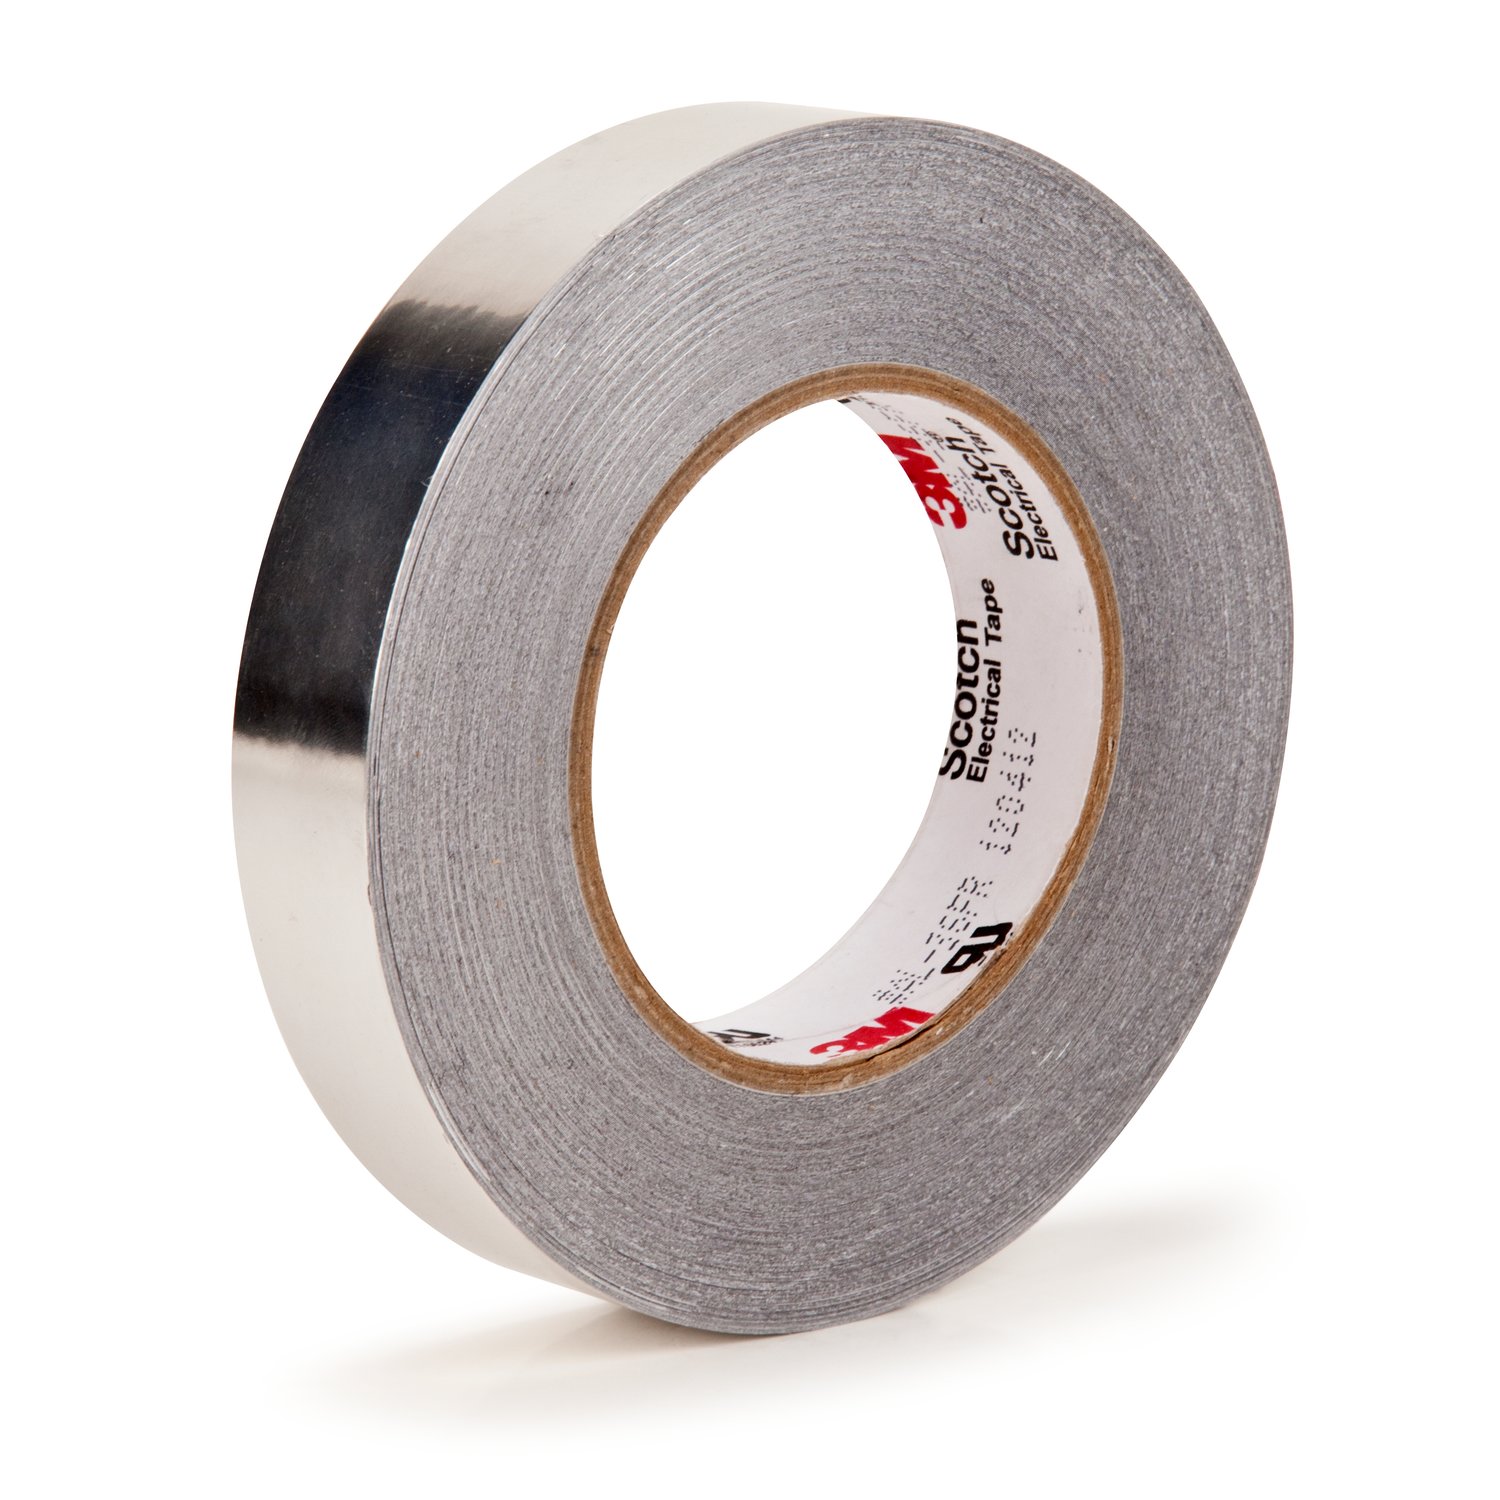 7010397450 - 3M Laminated Aluminum Foil EMI Shielding Tape AL-36FR, 6.56 in x 10 in,
10 Sheets/Bag